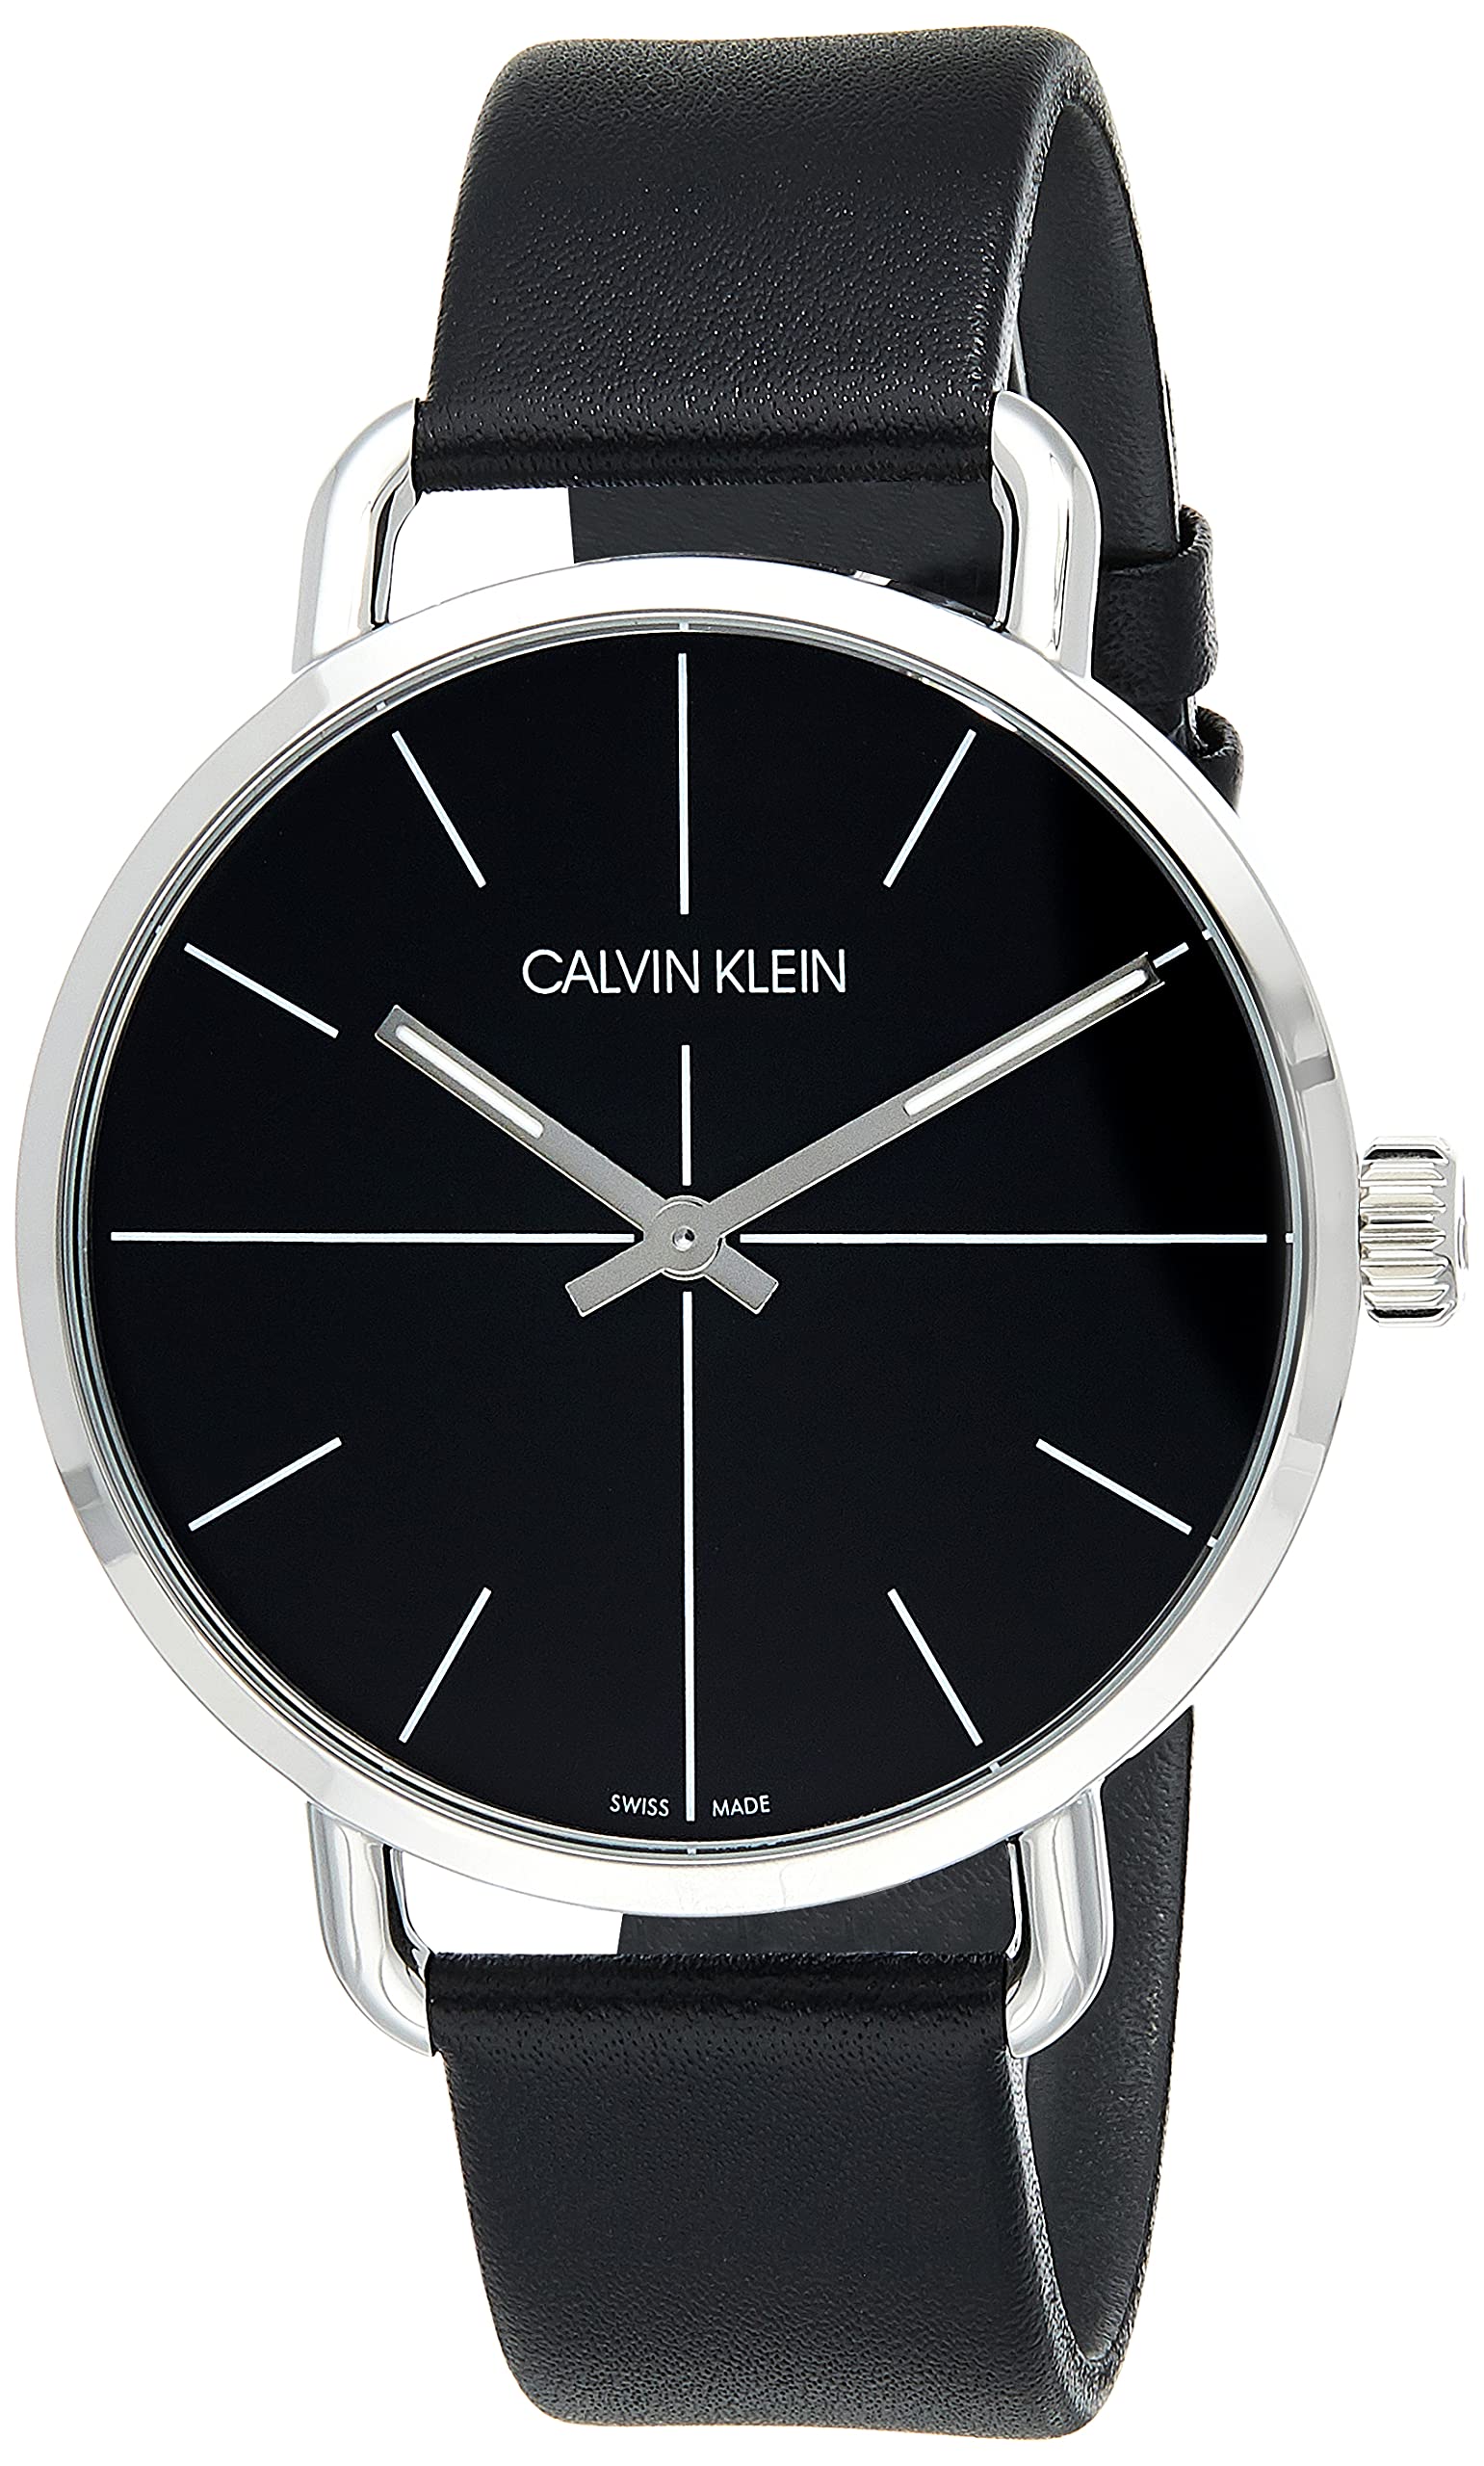 Calvin Klein Evan Black Dial Black Leather Strap Watch for Men - K7B211CZ